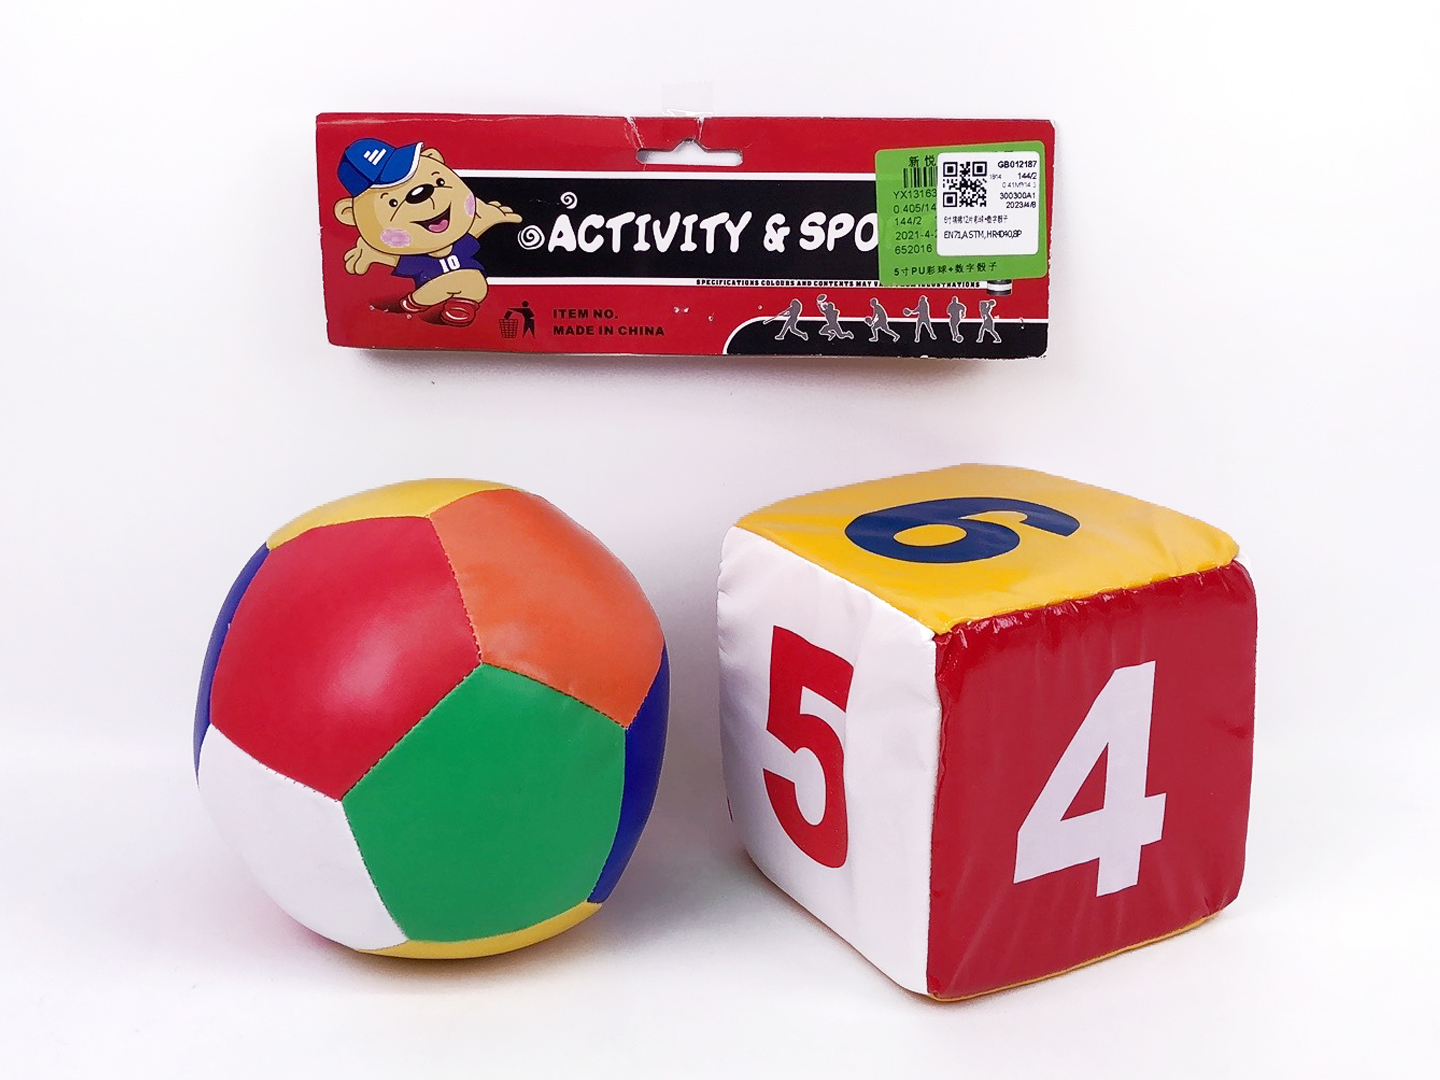 6inch Stuffed Ball & Stuff Dice toys